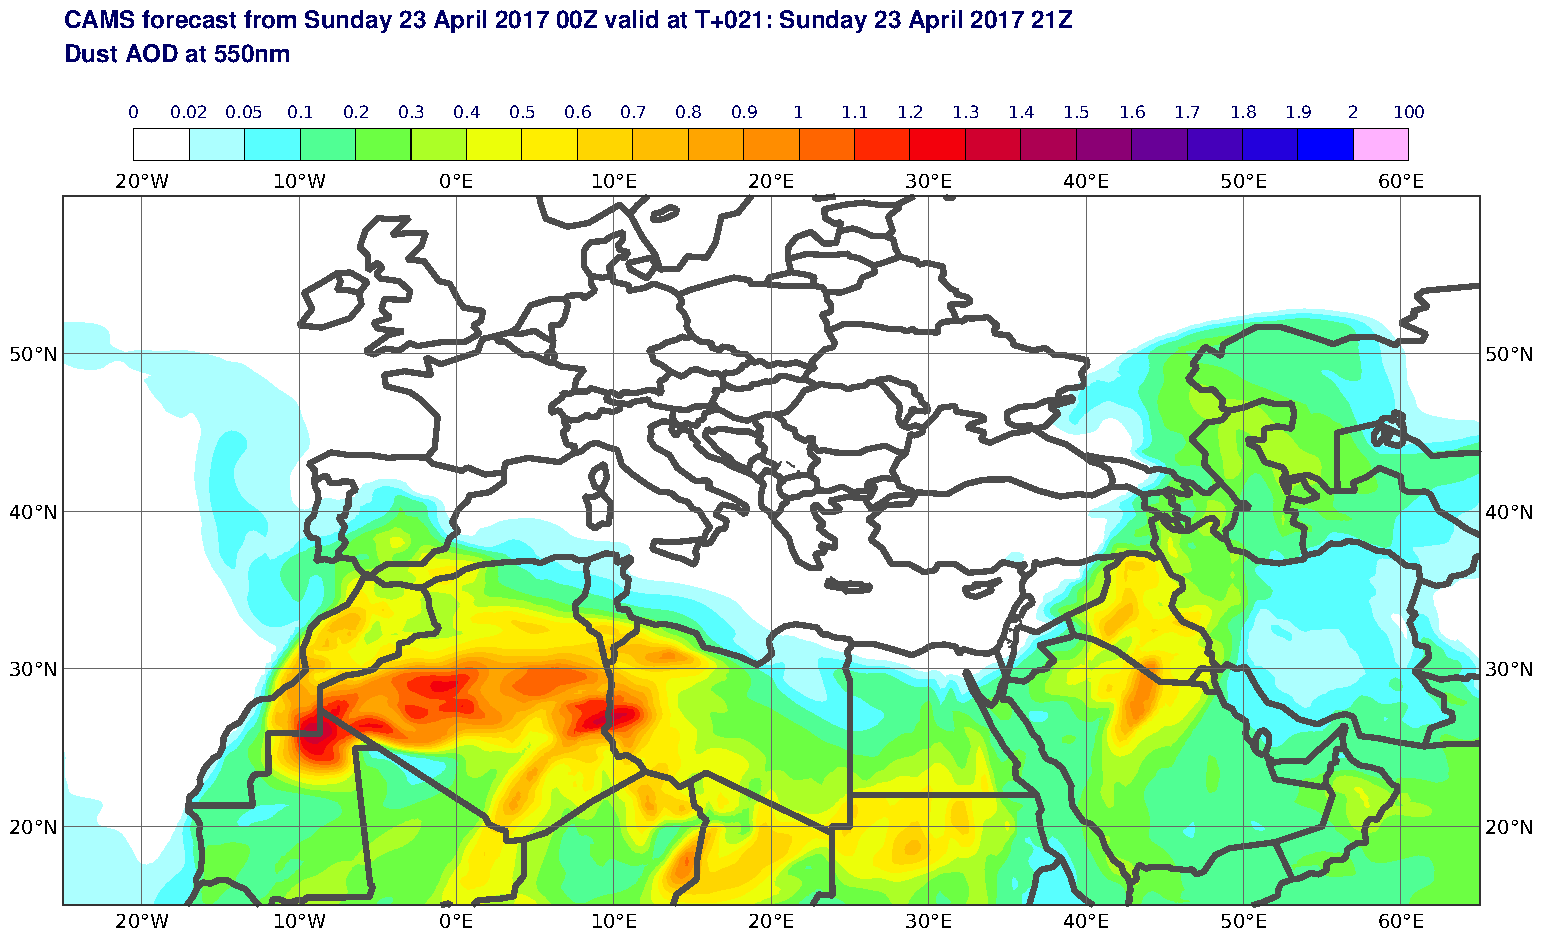 Dust AOD at 550nm valid at T21 - 2017-04-23 21:00